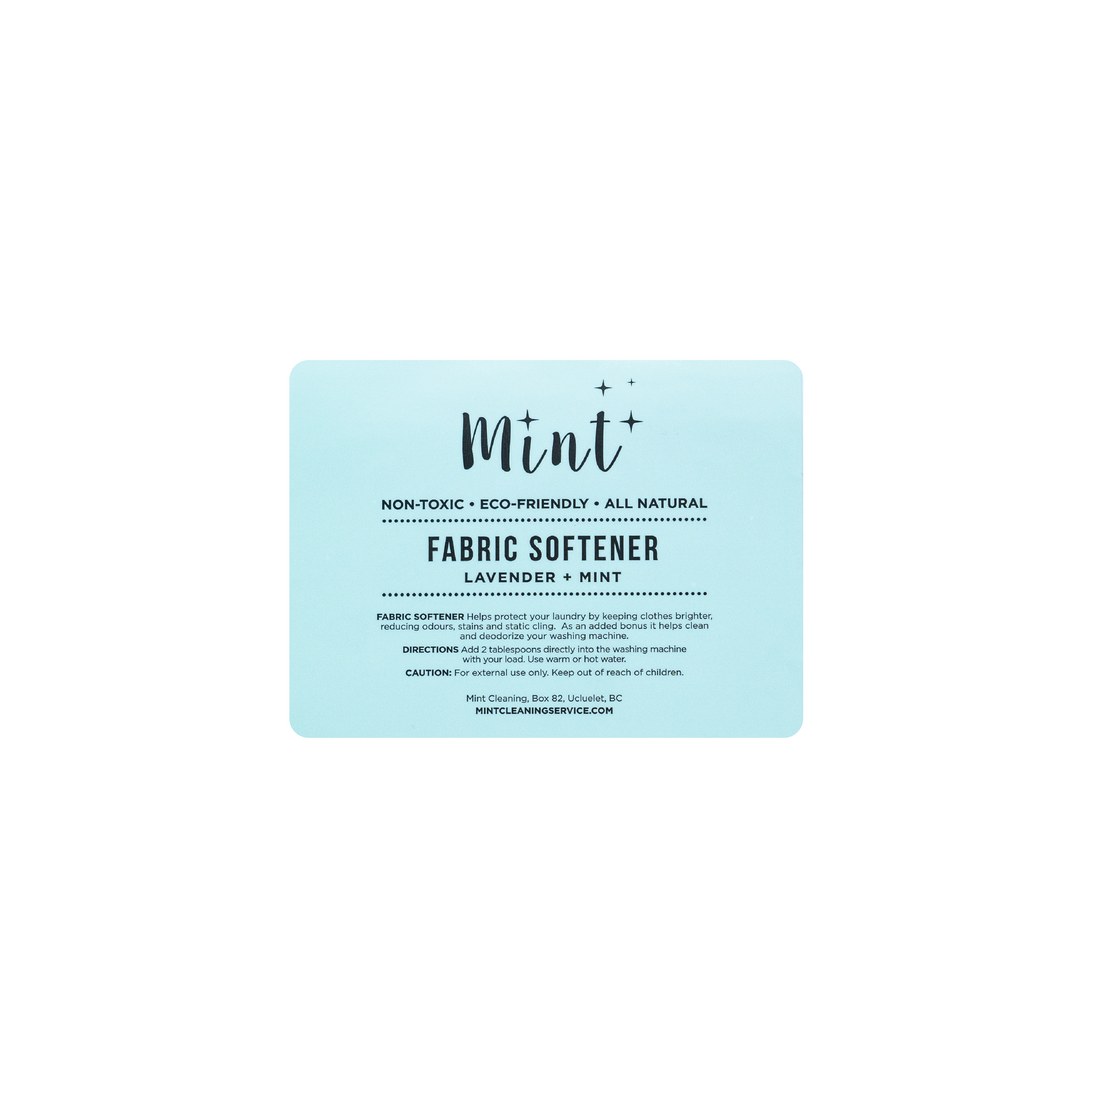 Fabric Softener Label